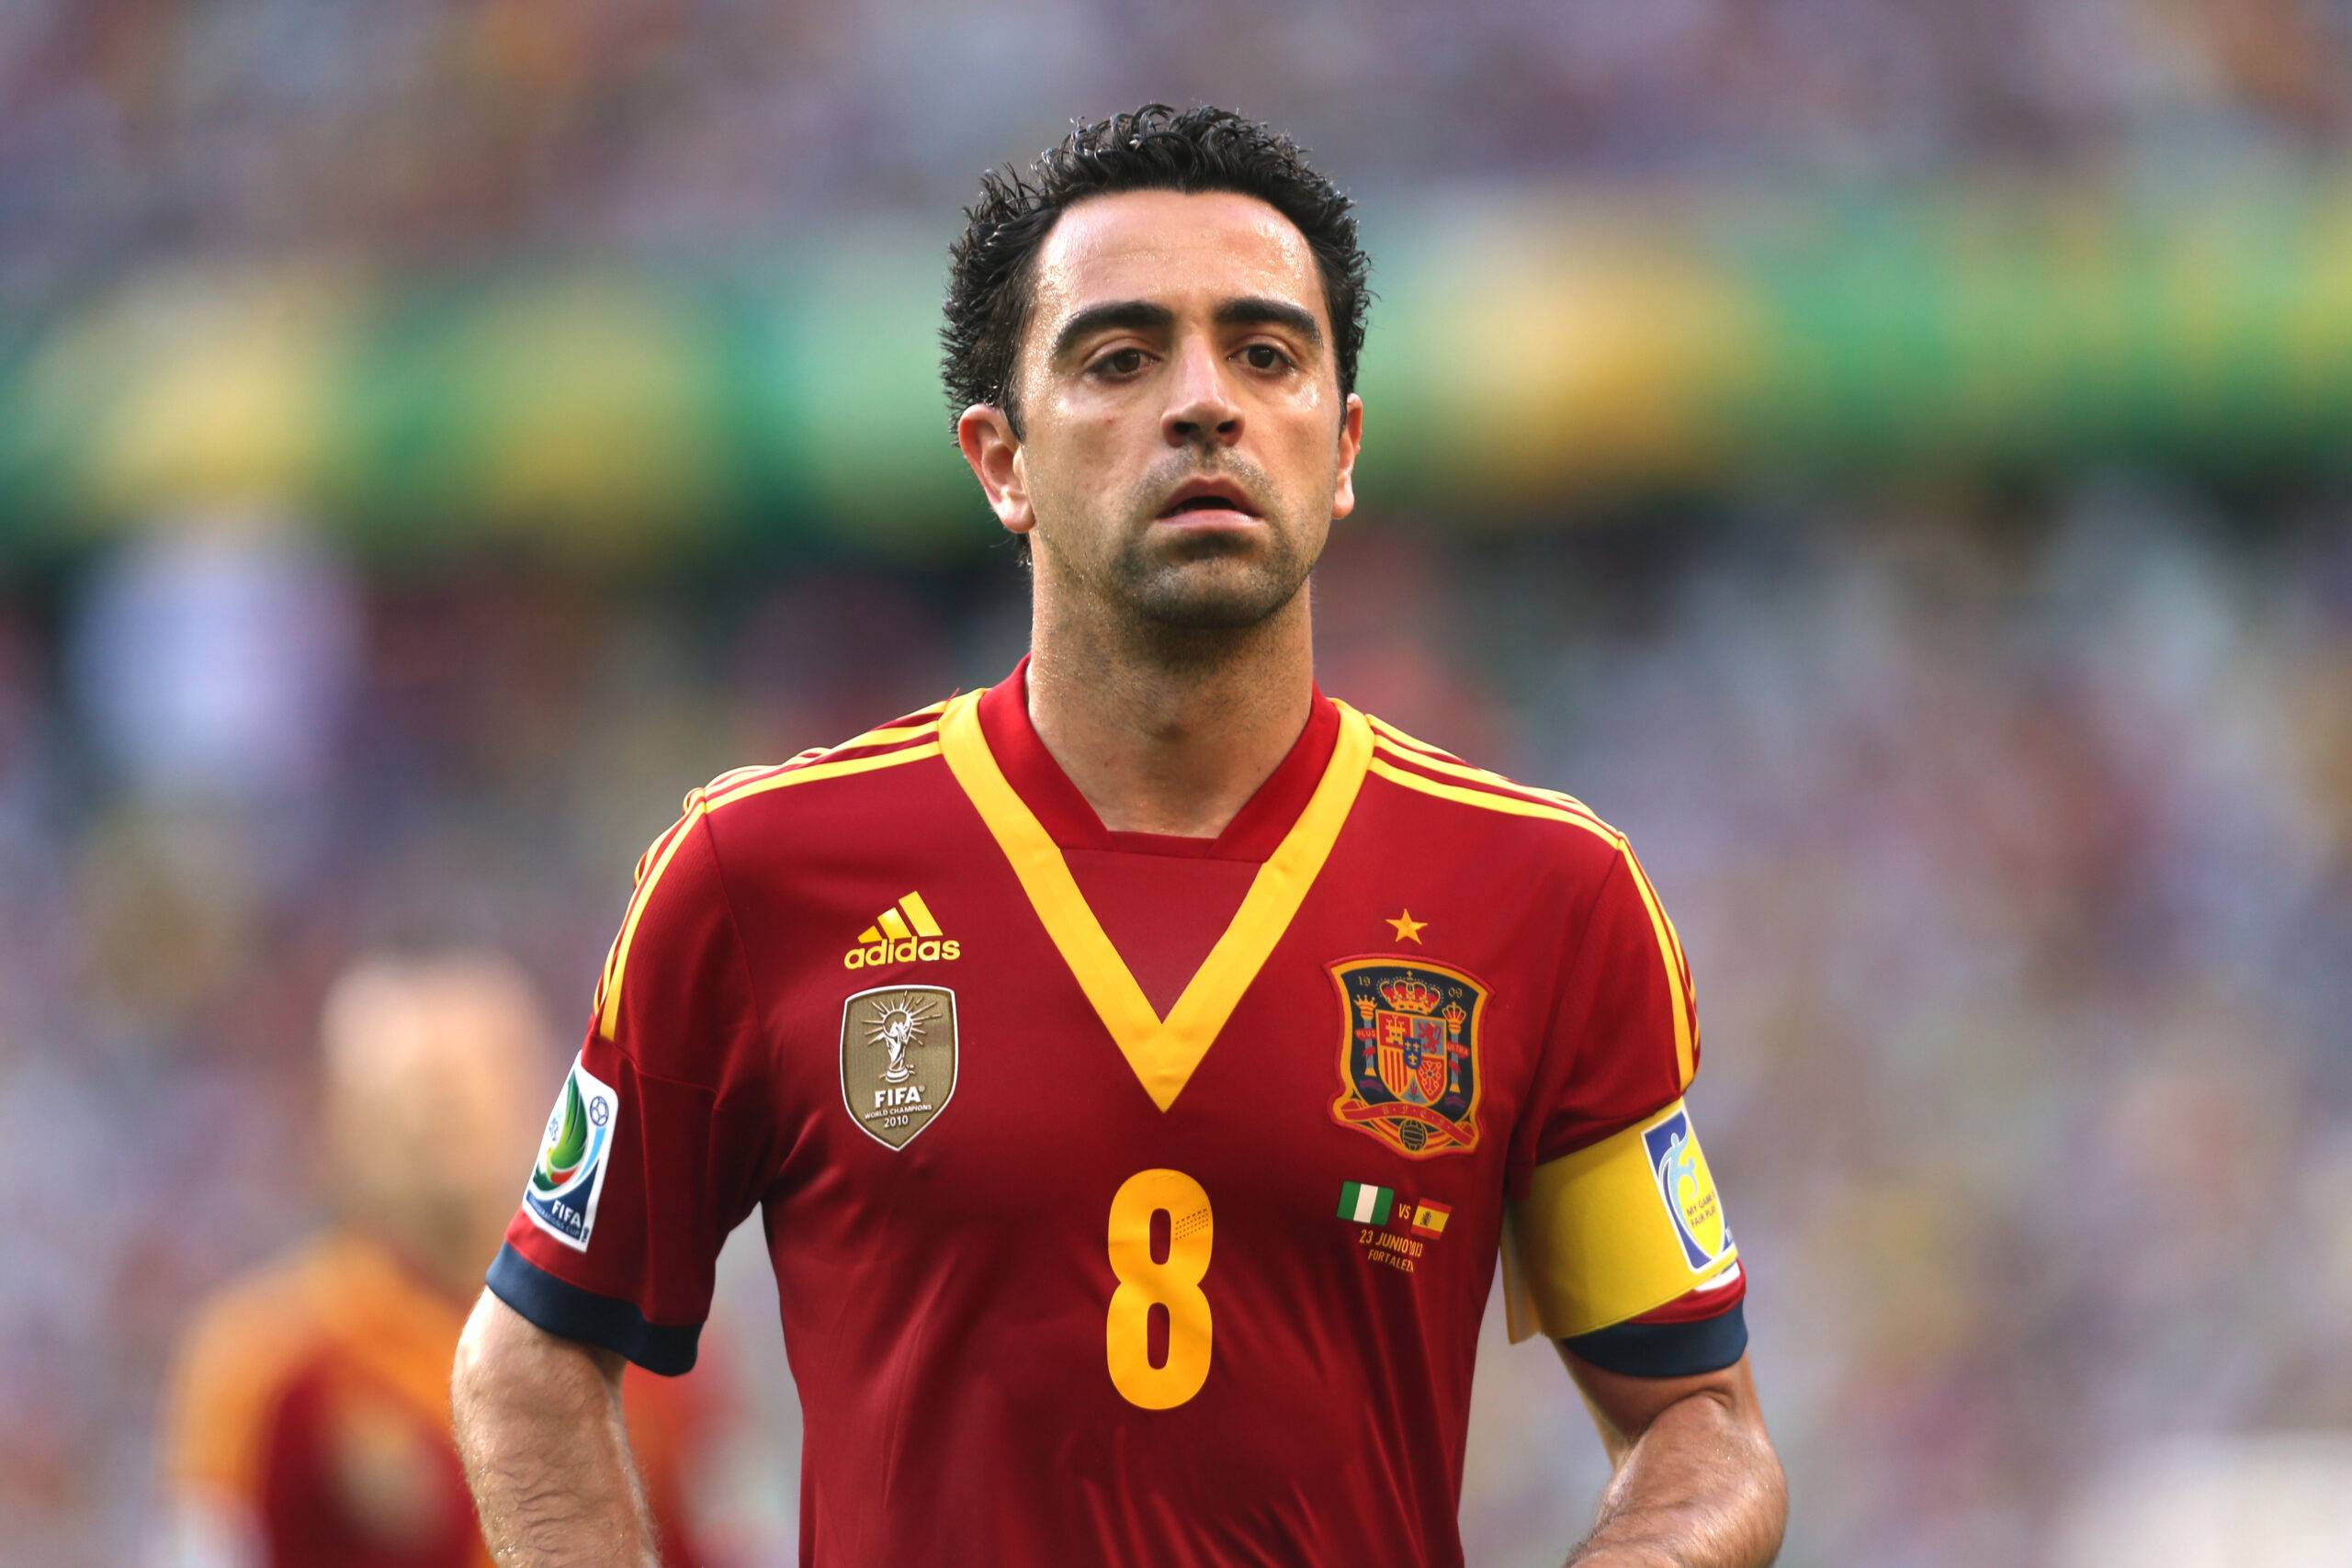 Xavi playing for Spain.